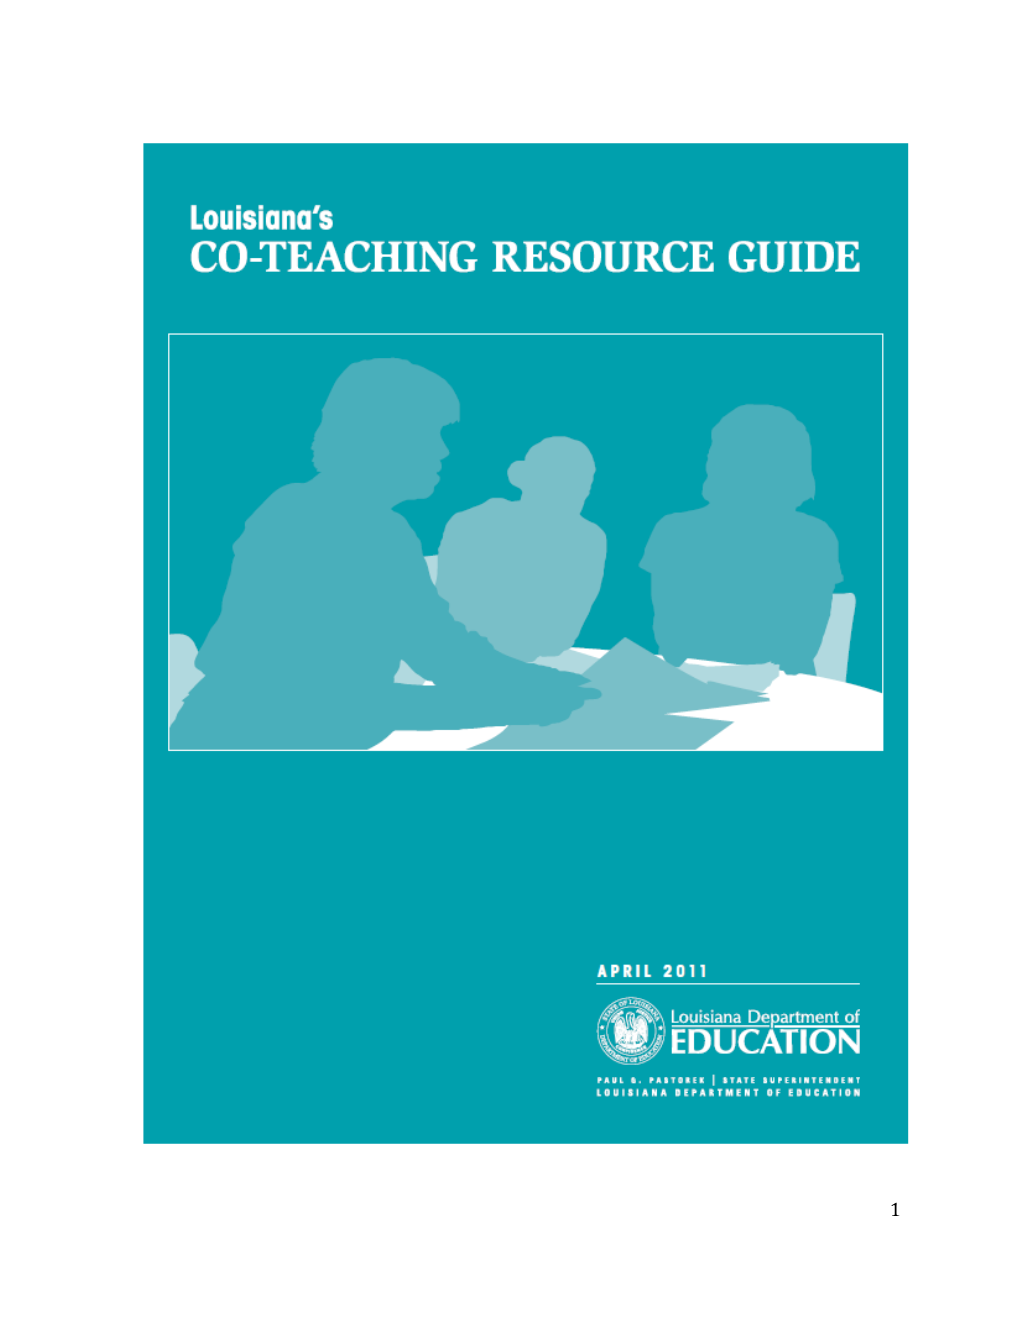 Co-Teaching Resource Guide